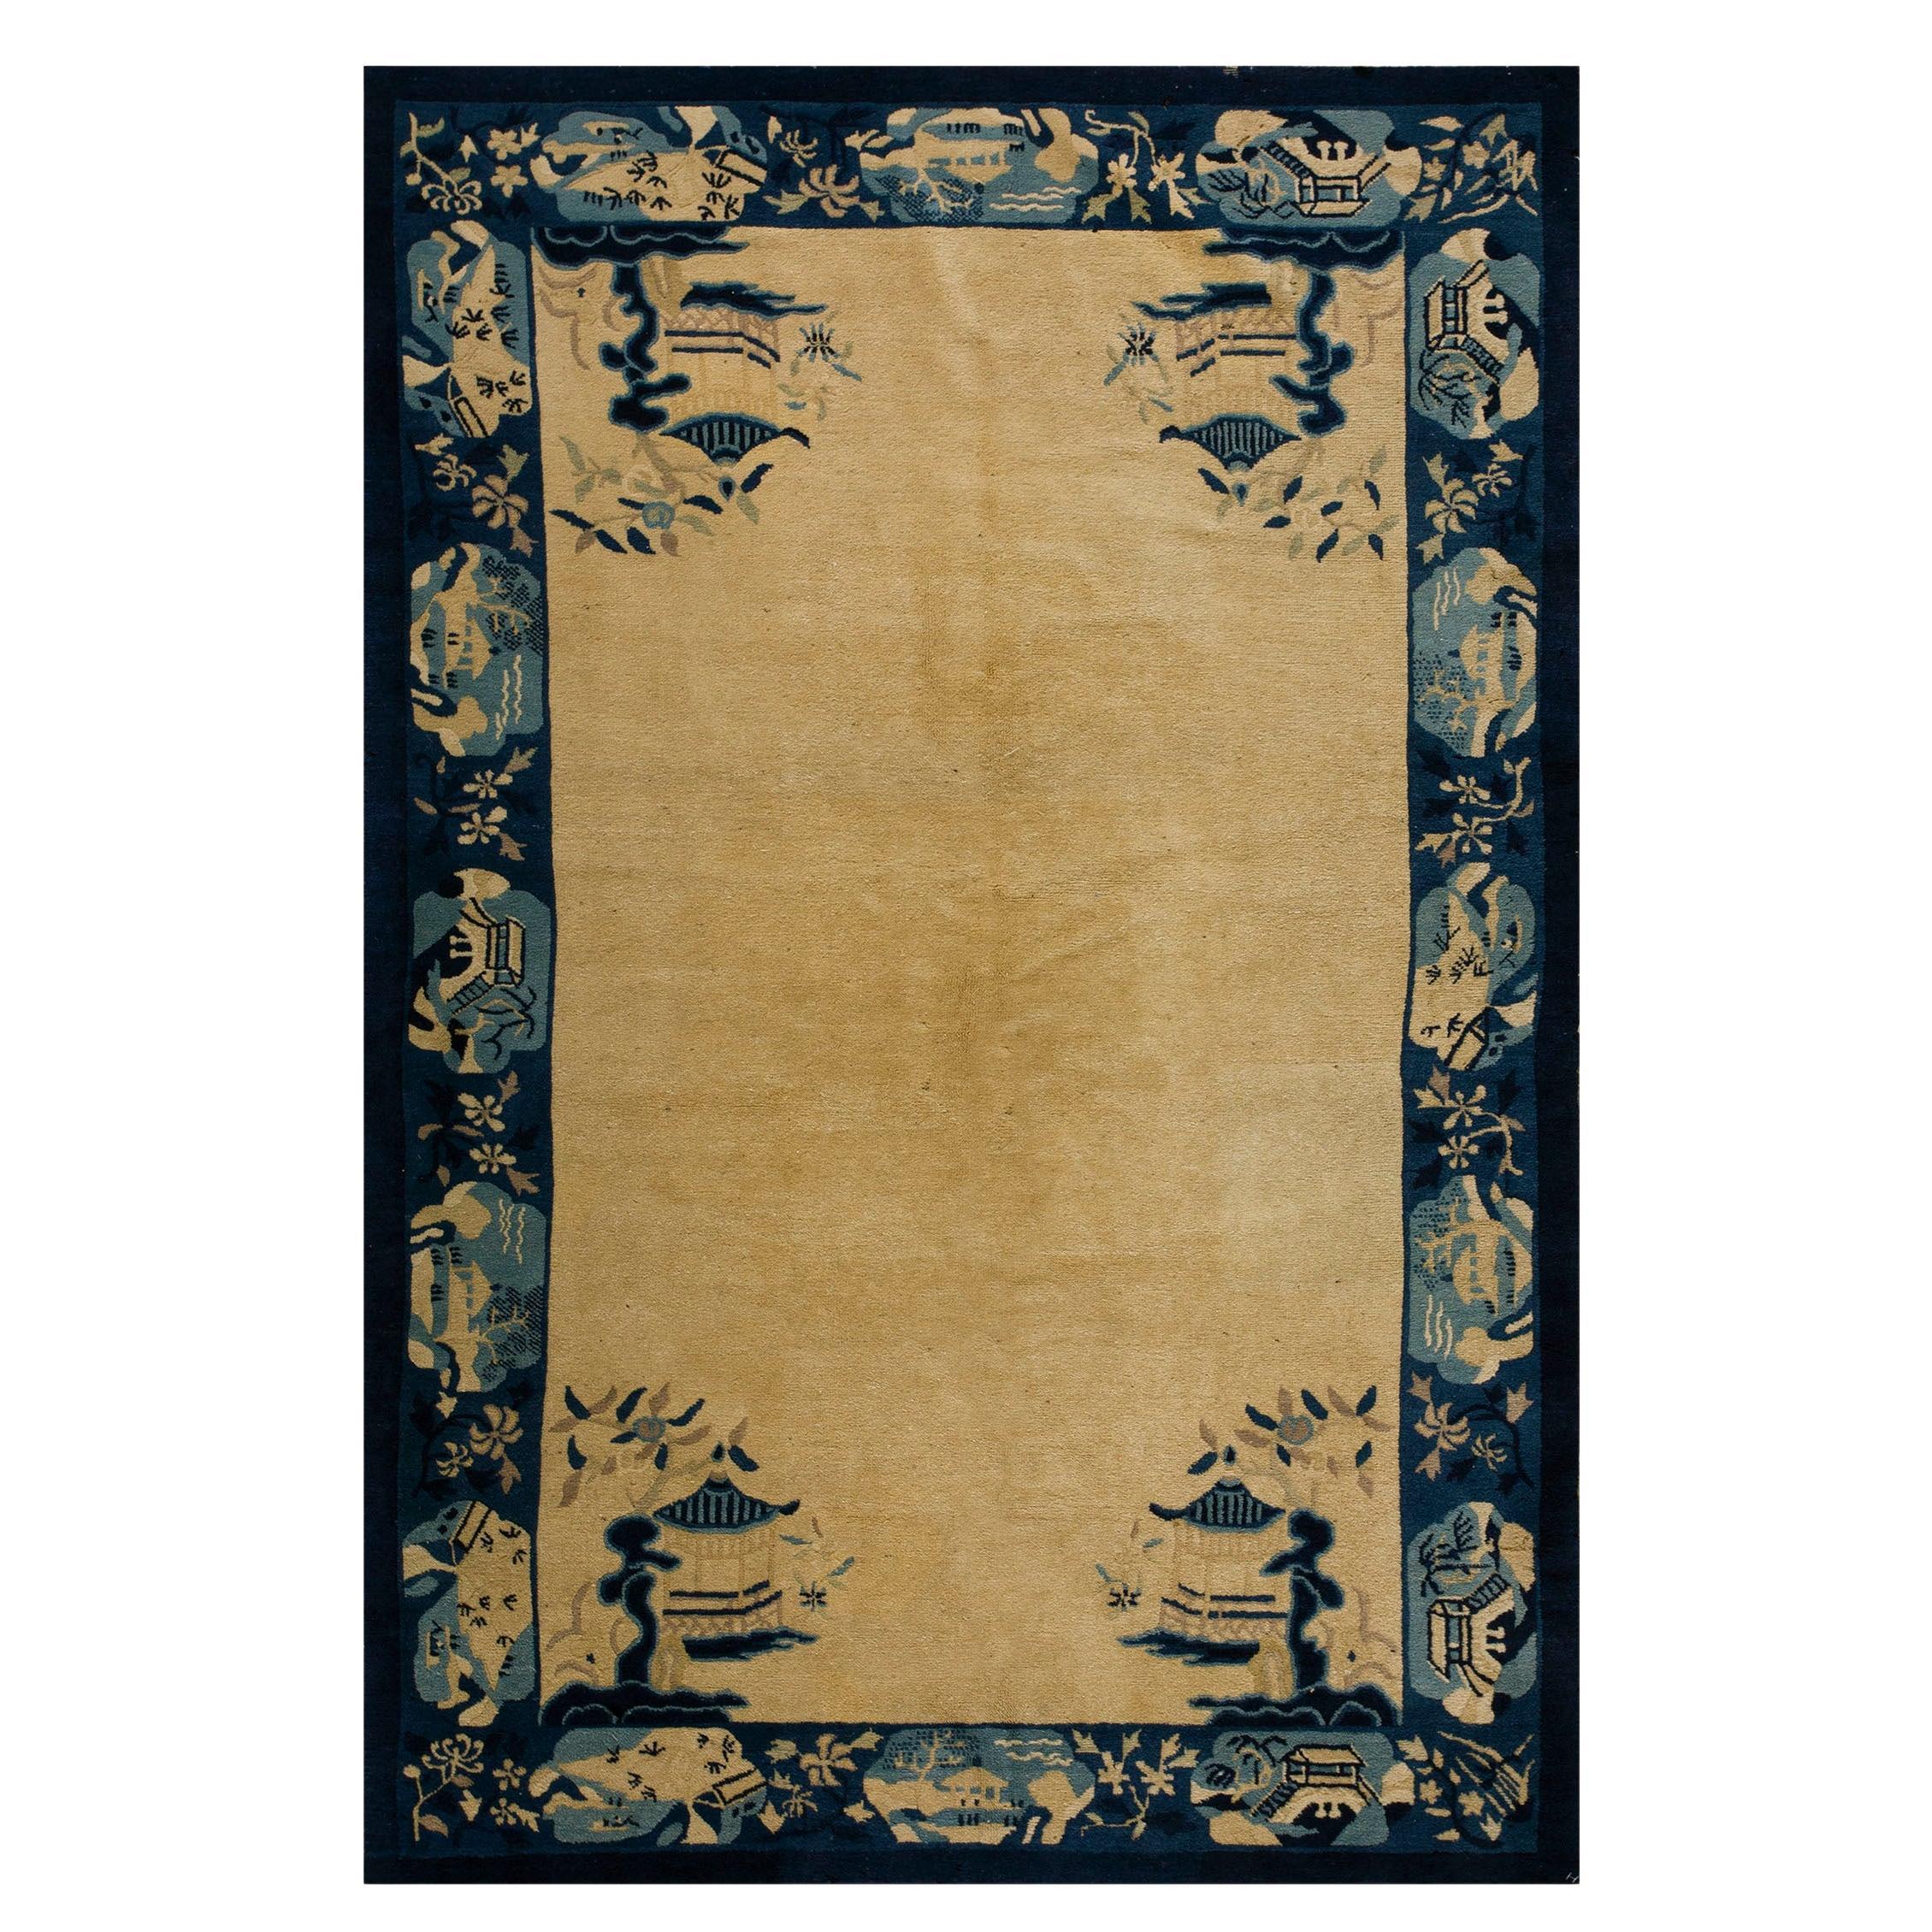 Late 19th Century Chinese Peking Carpet ( 5' x 7'10" - 153 x 239 cm )